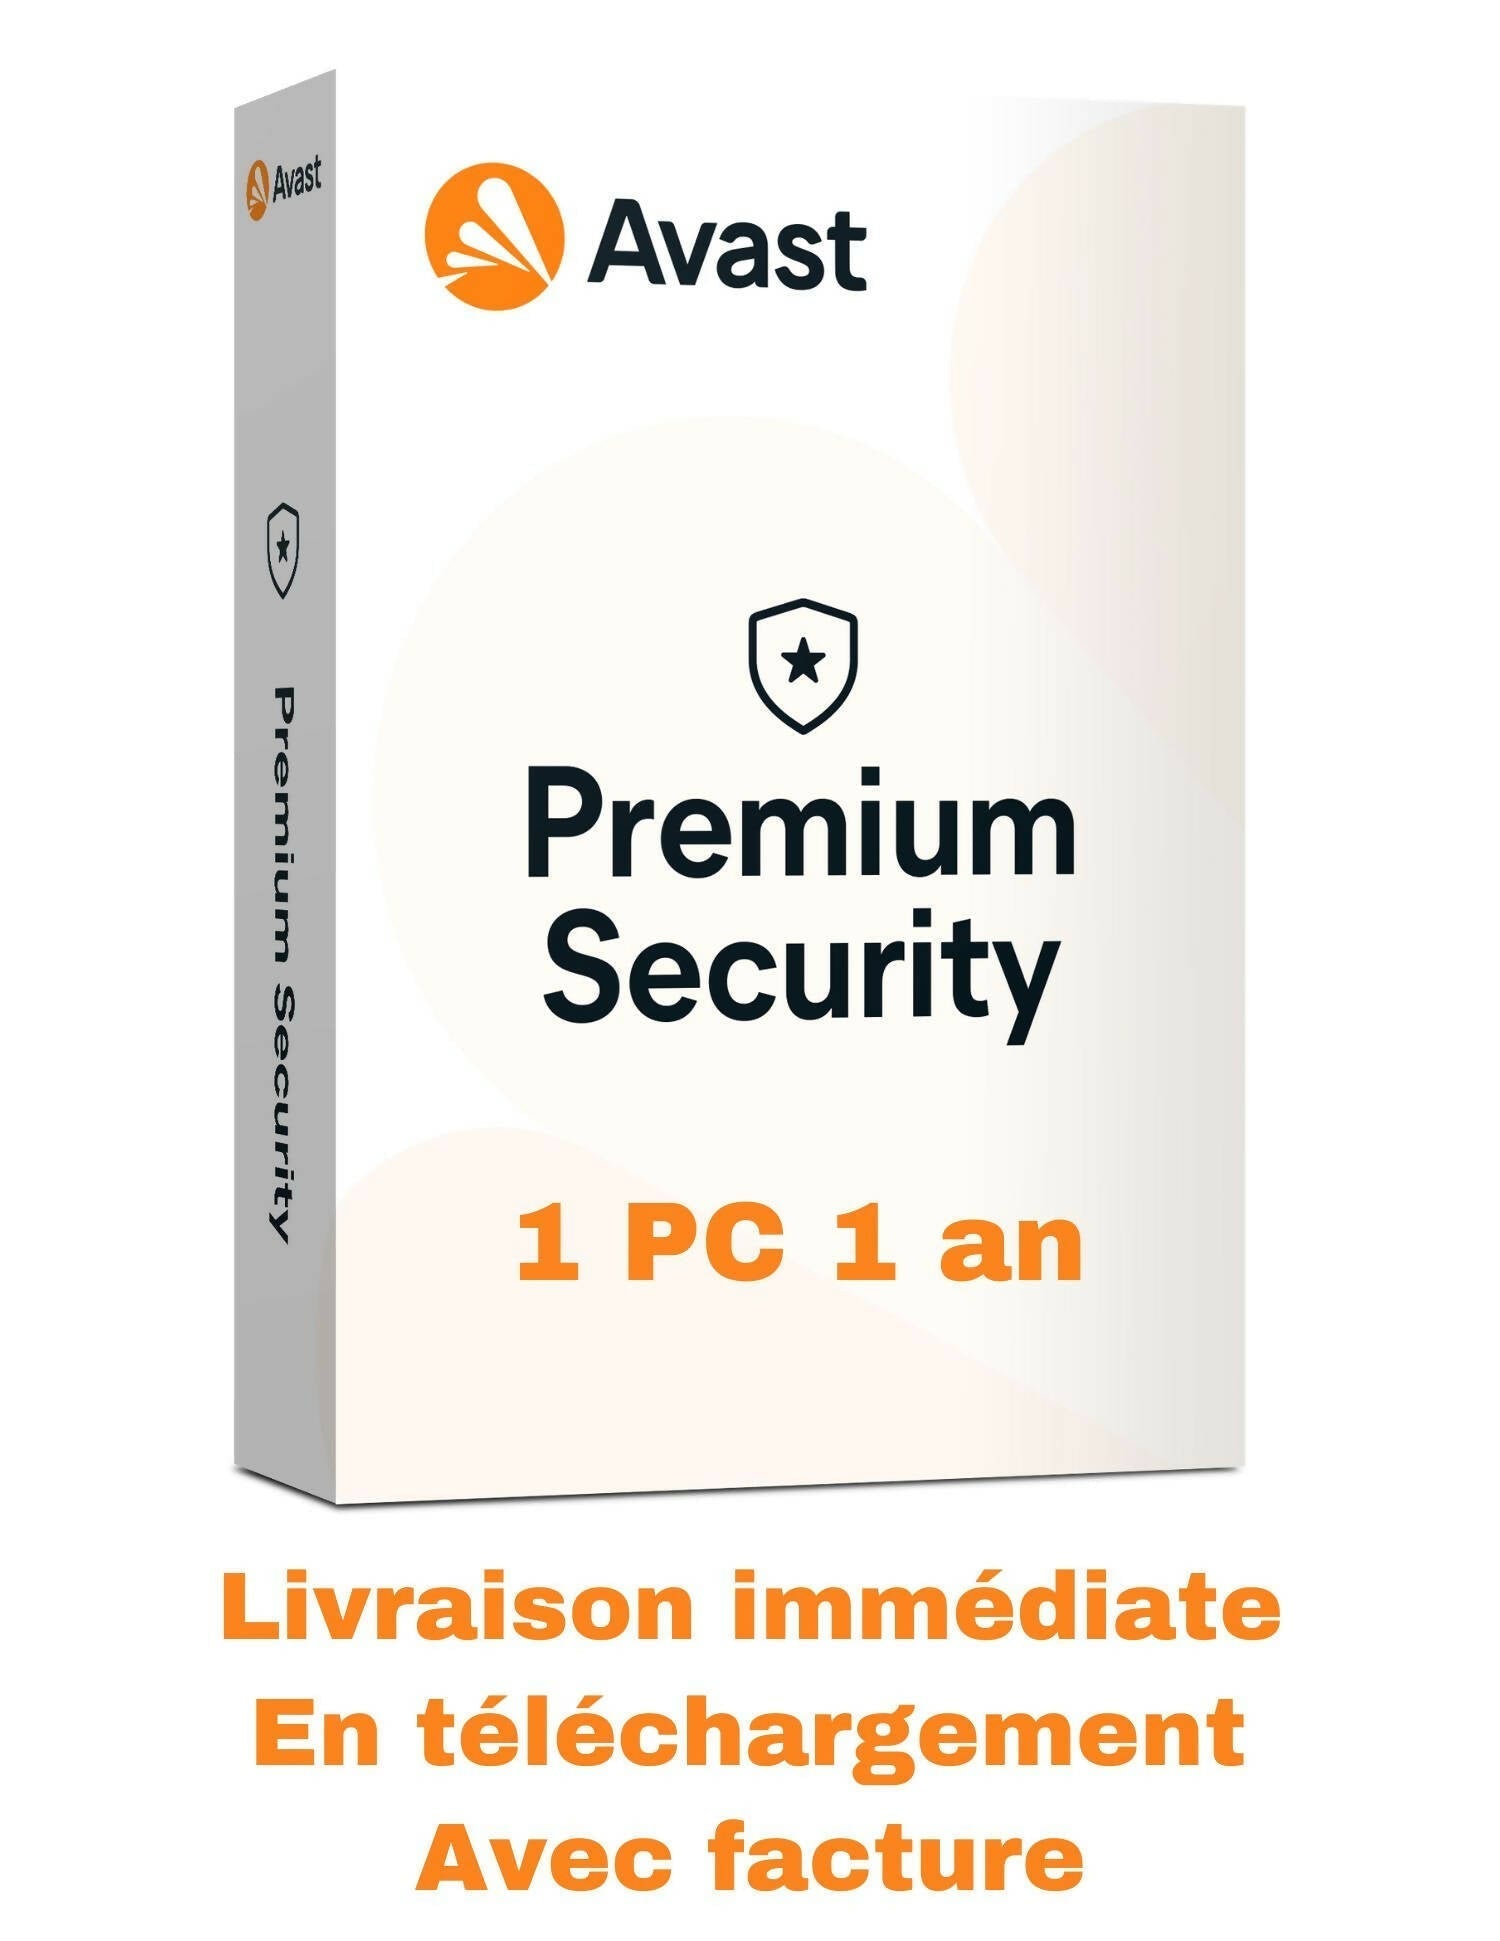 Avast Premium Security 1 PC 1 an clicktofournisseur.com